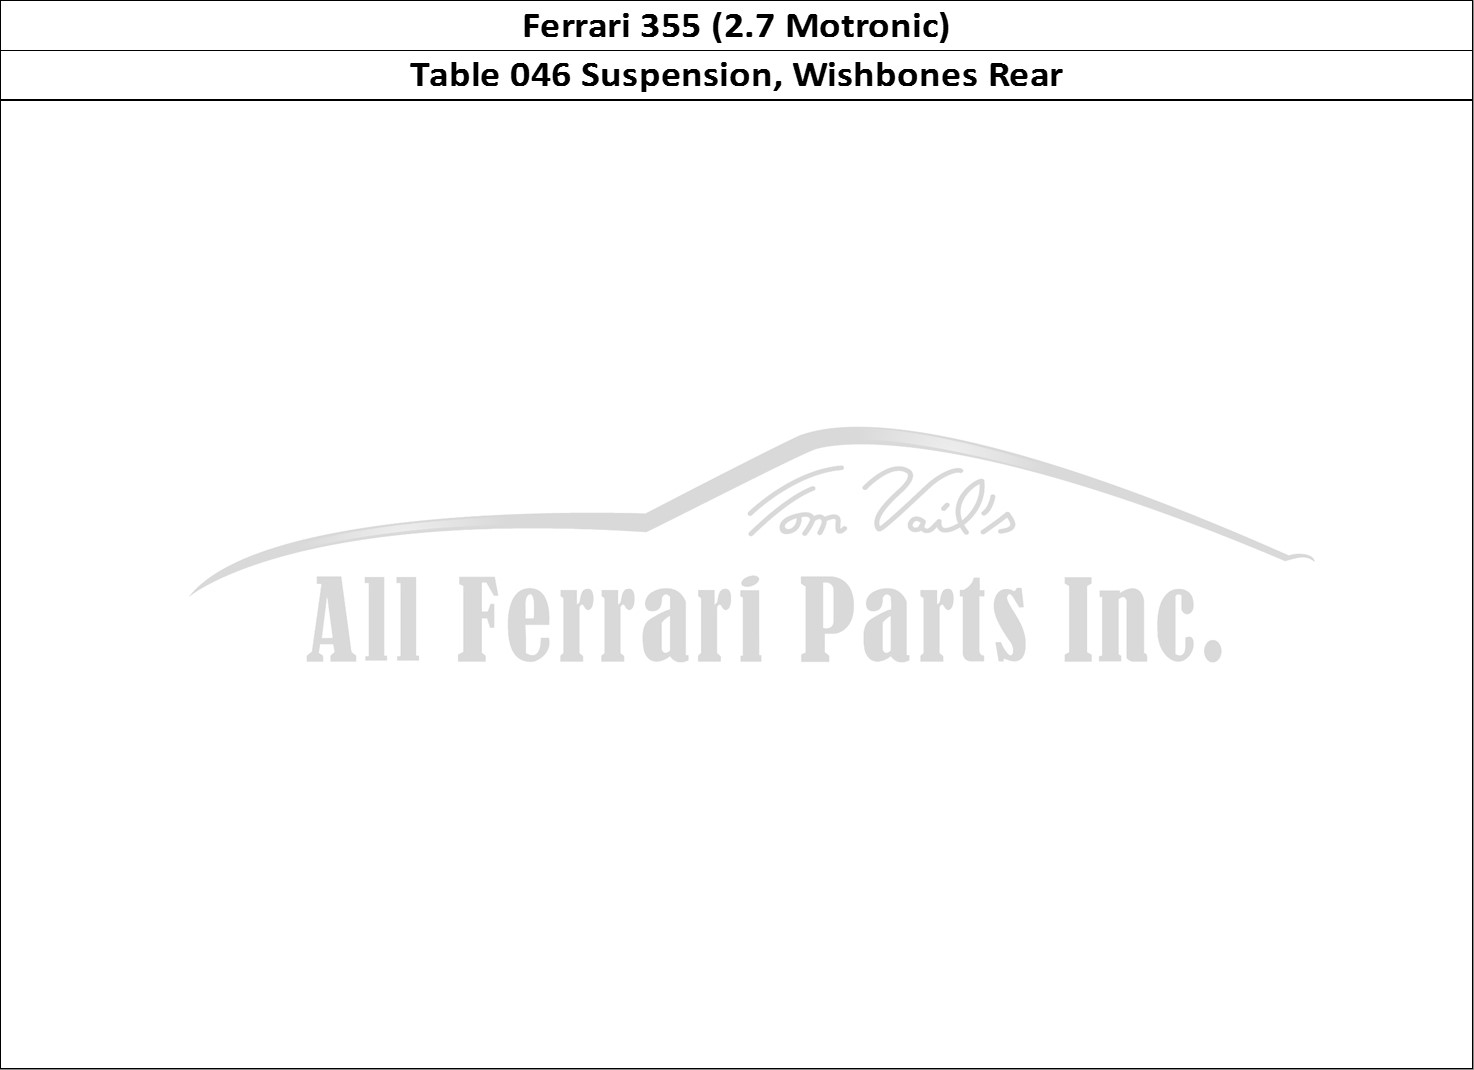 Ferrari Parts Ferrari 355 (2.7 Motronic) Page 046 Rear Suspension - Wishbon